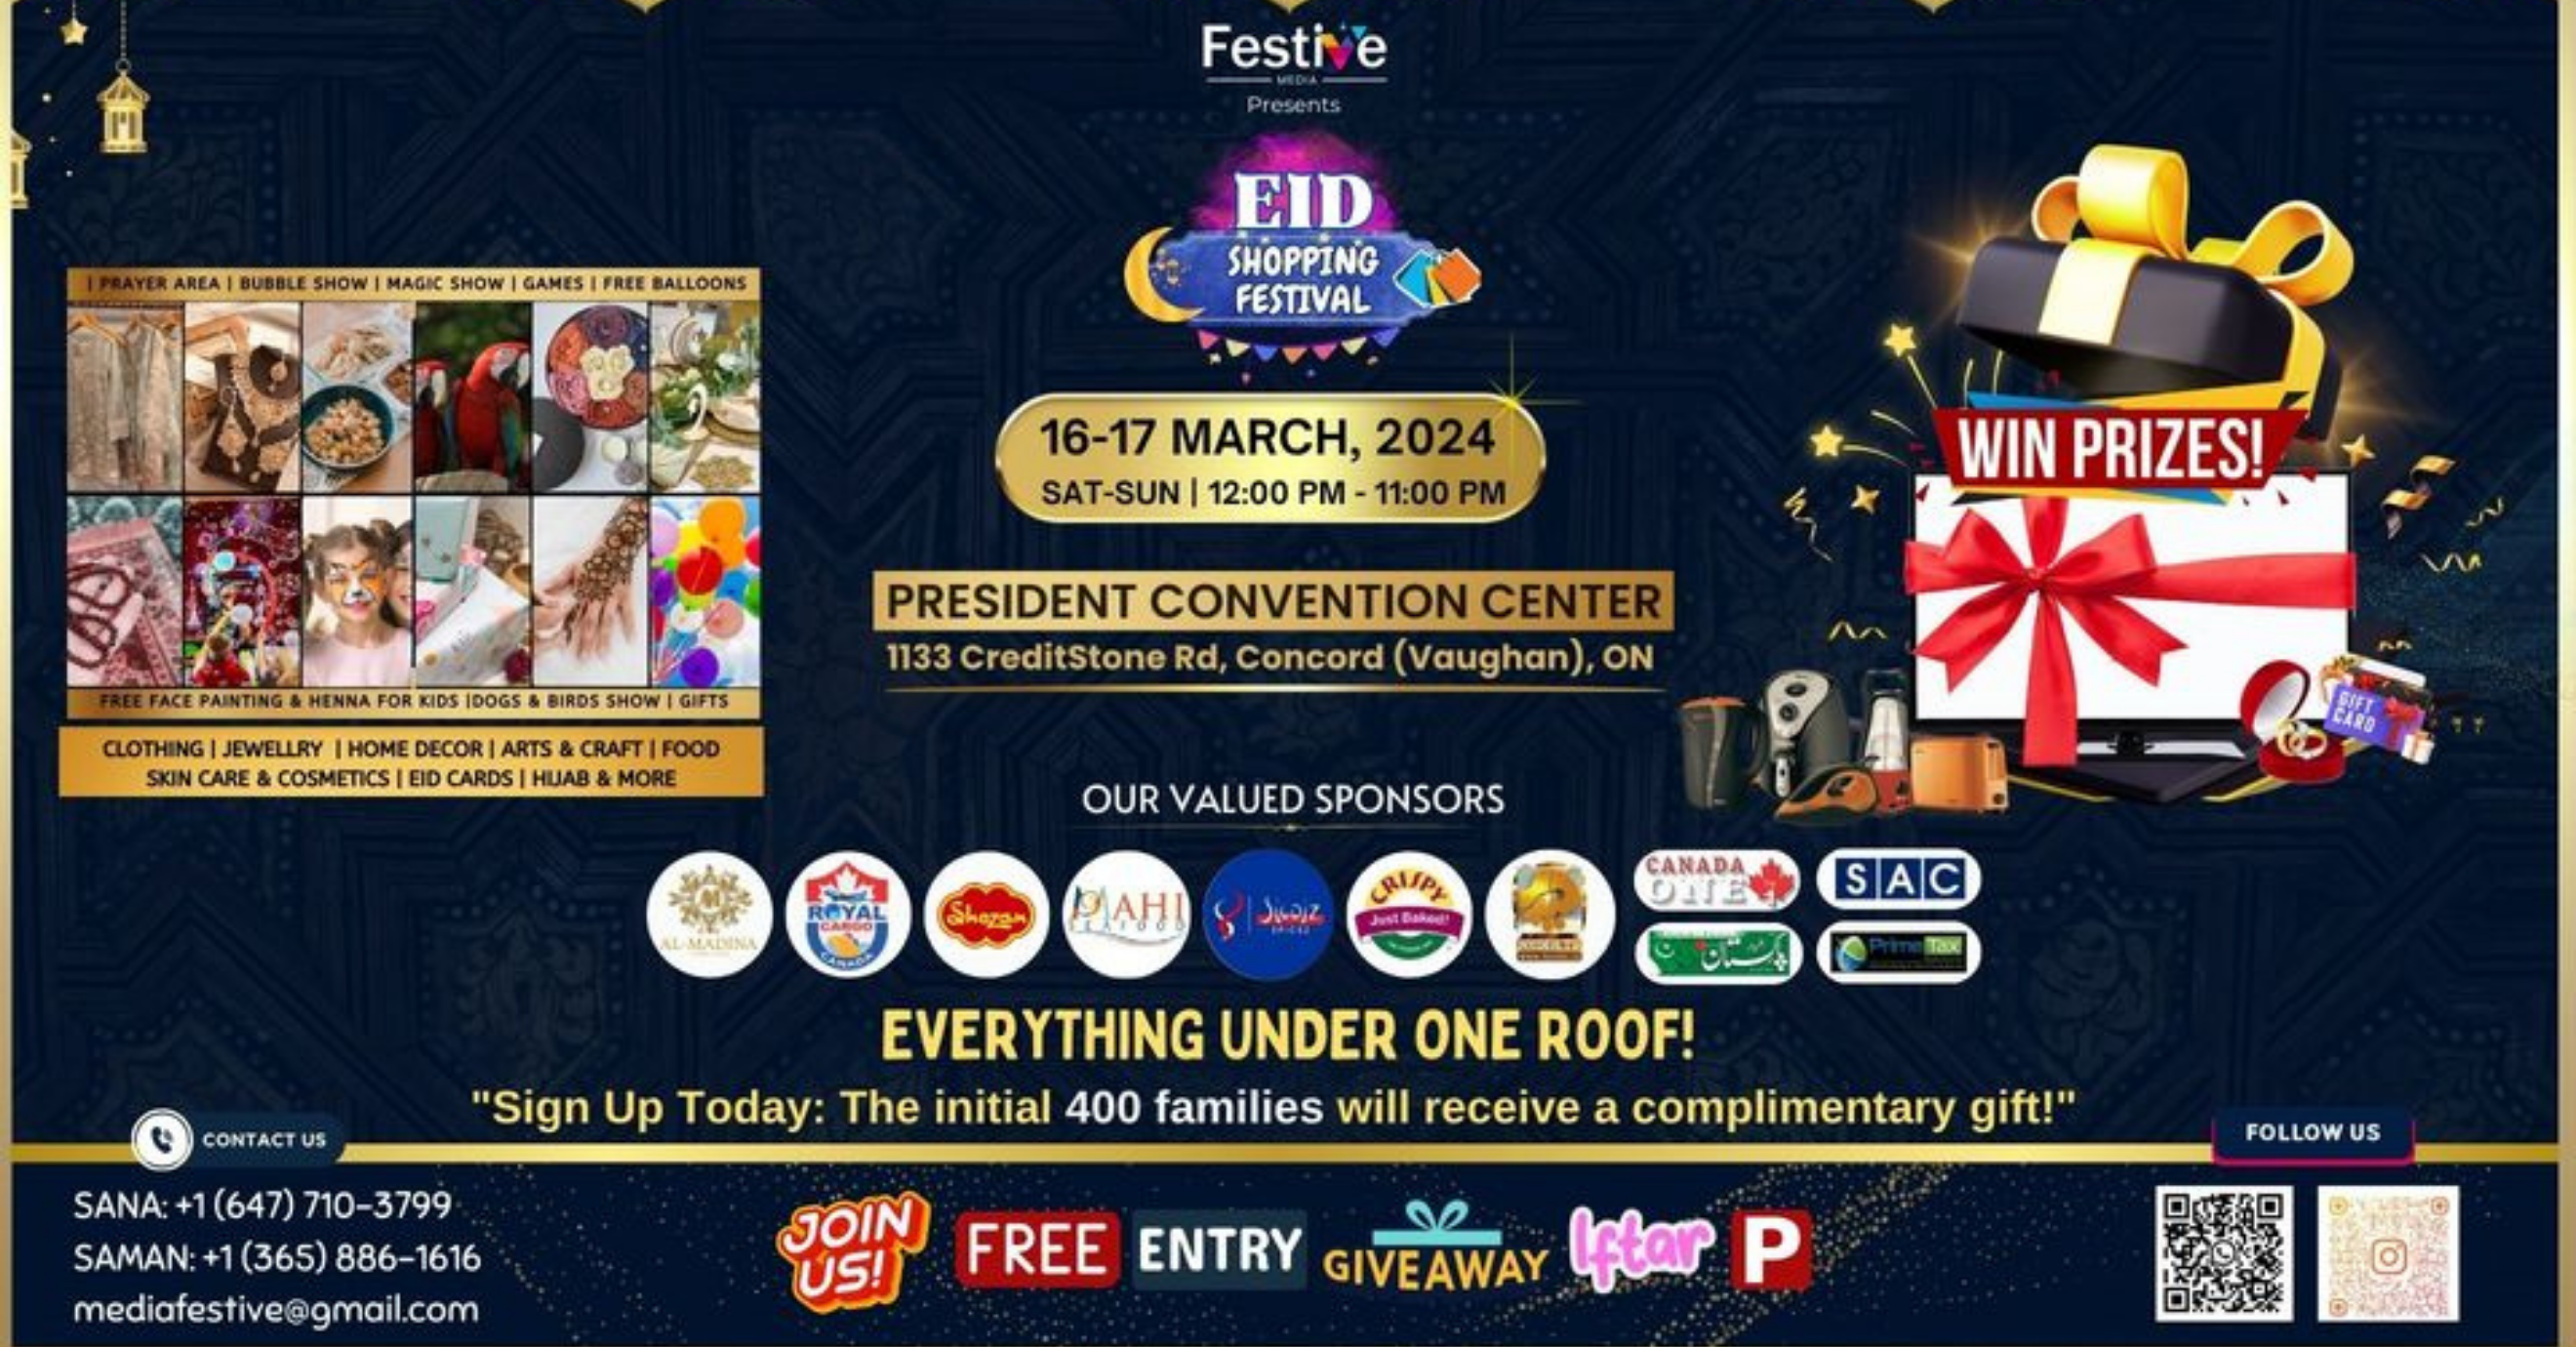 Festive Media Presents Eid Shopping Festival